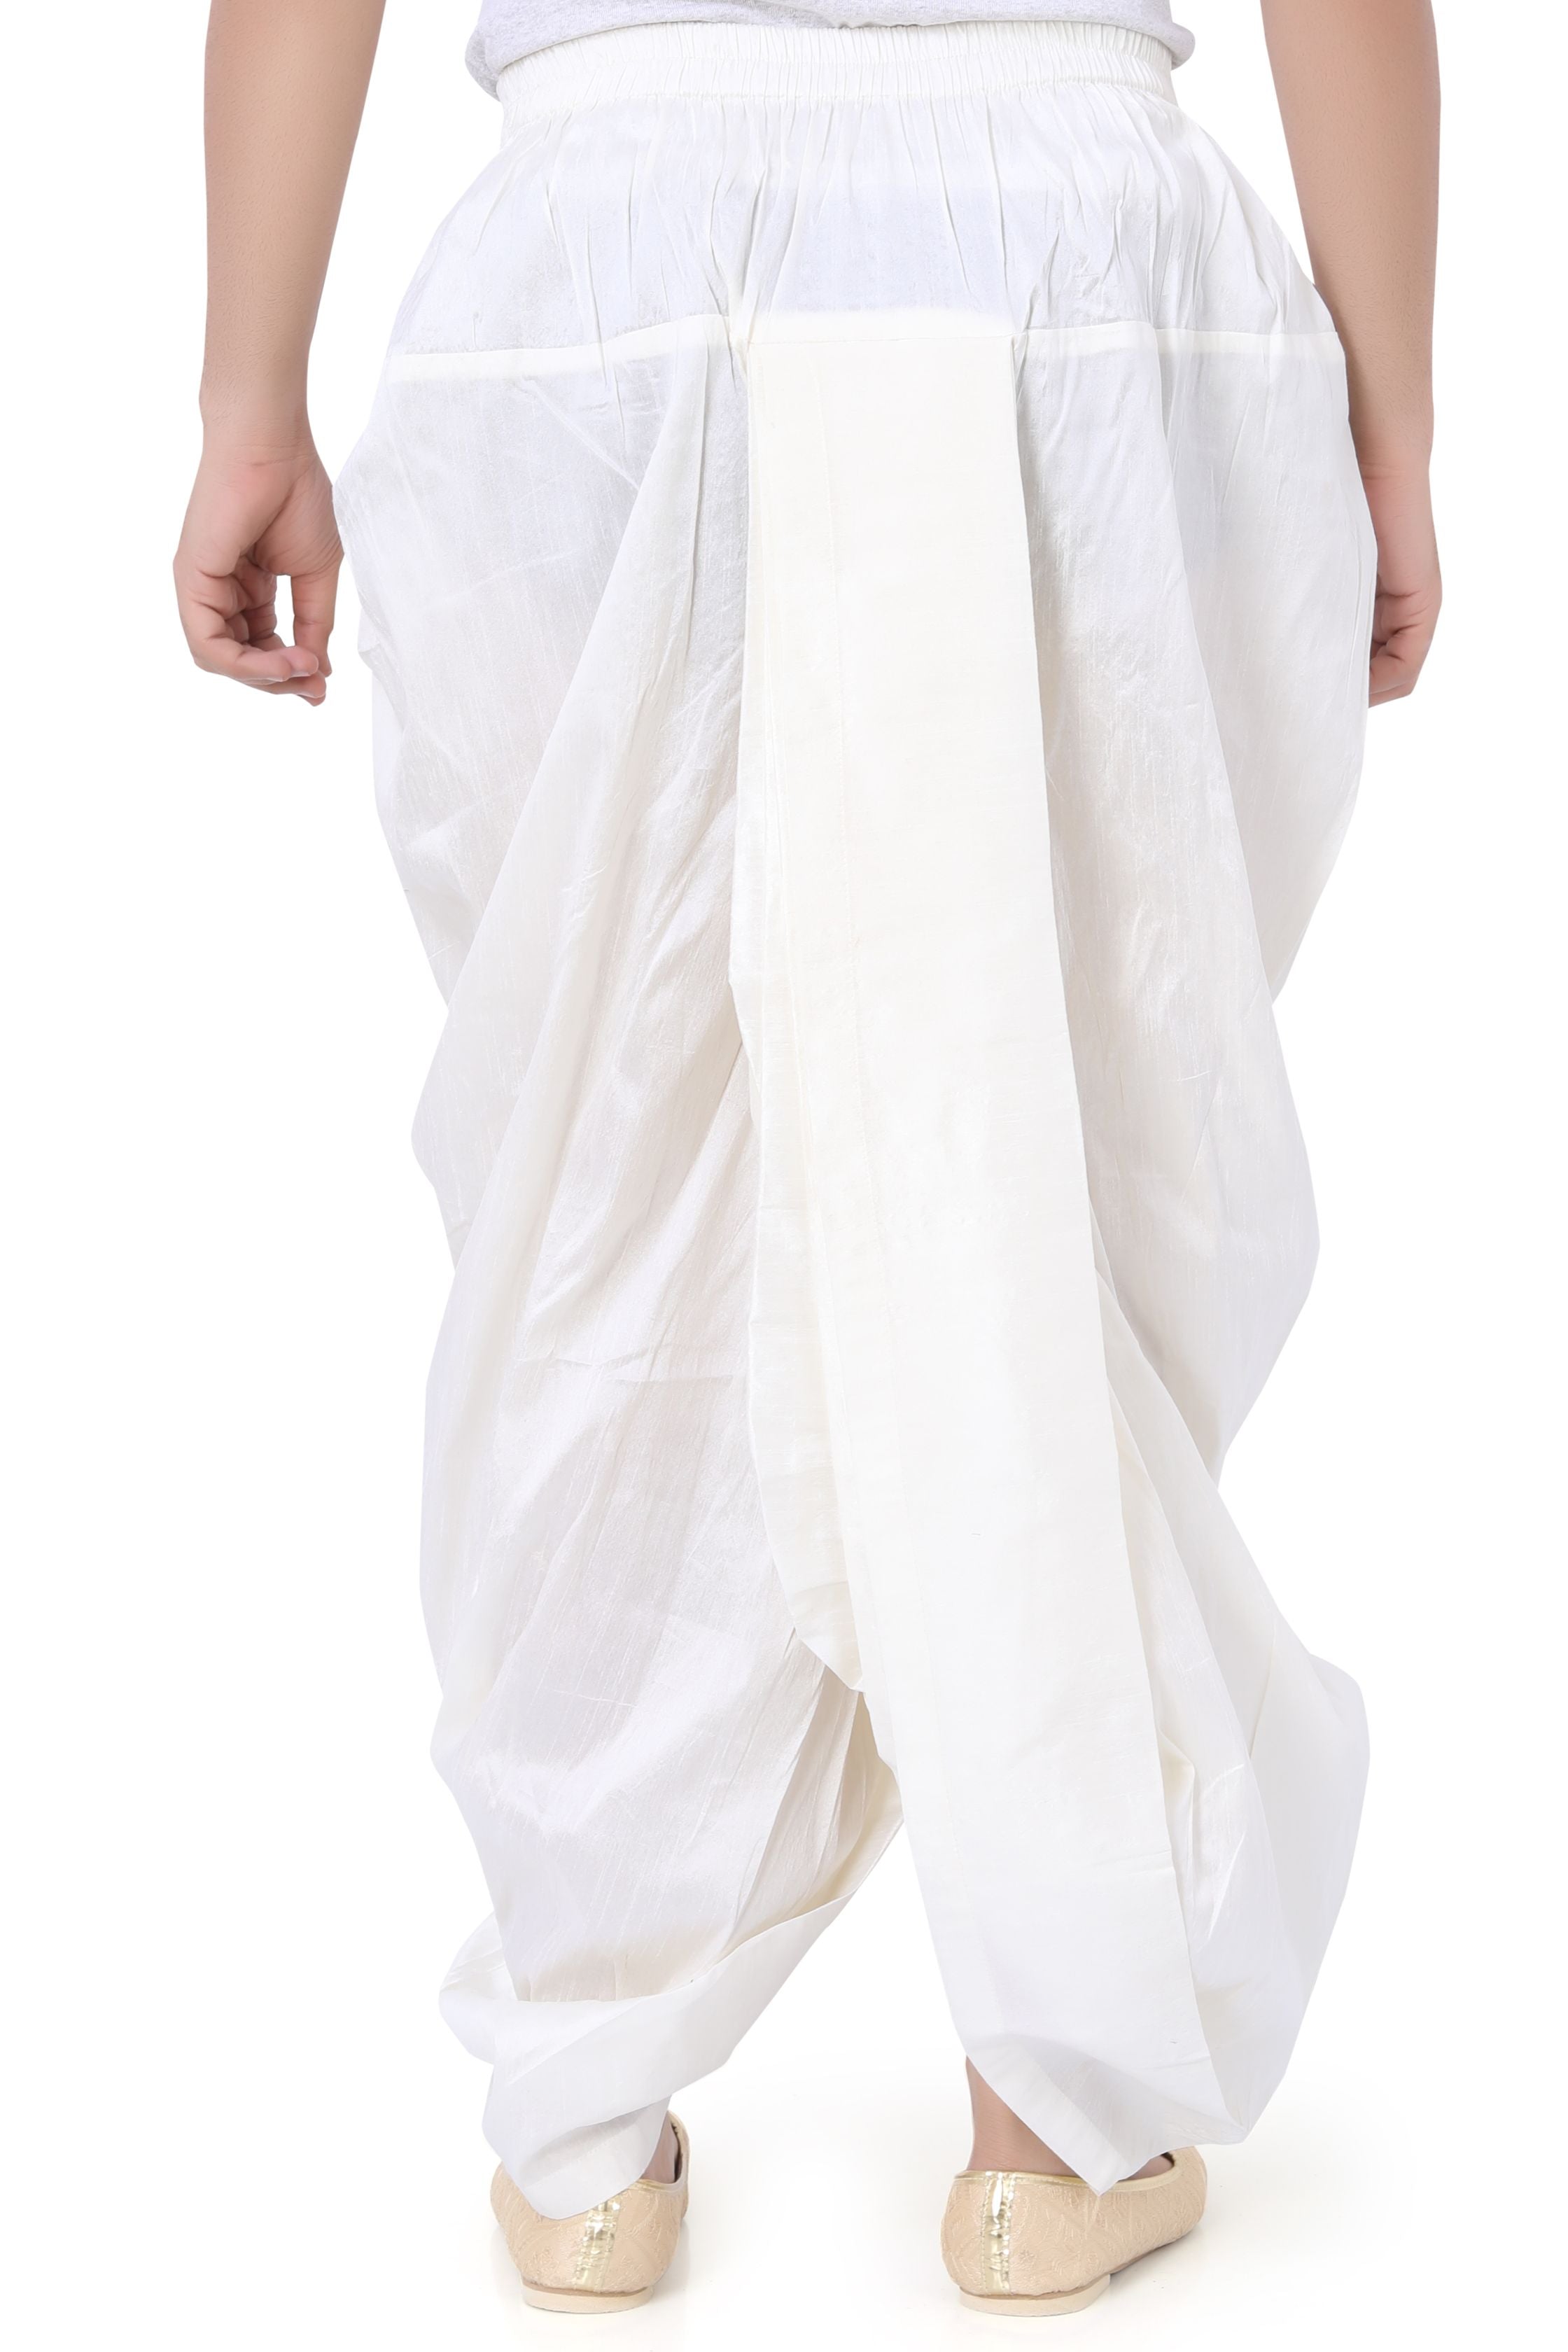 Dupion Silk Dhoti in White Colour